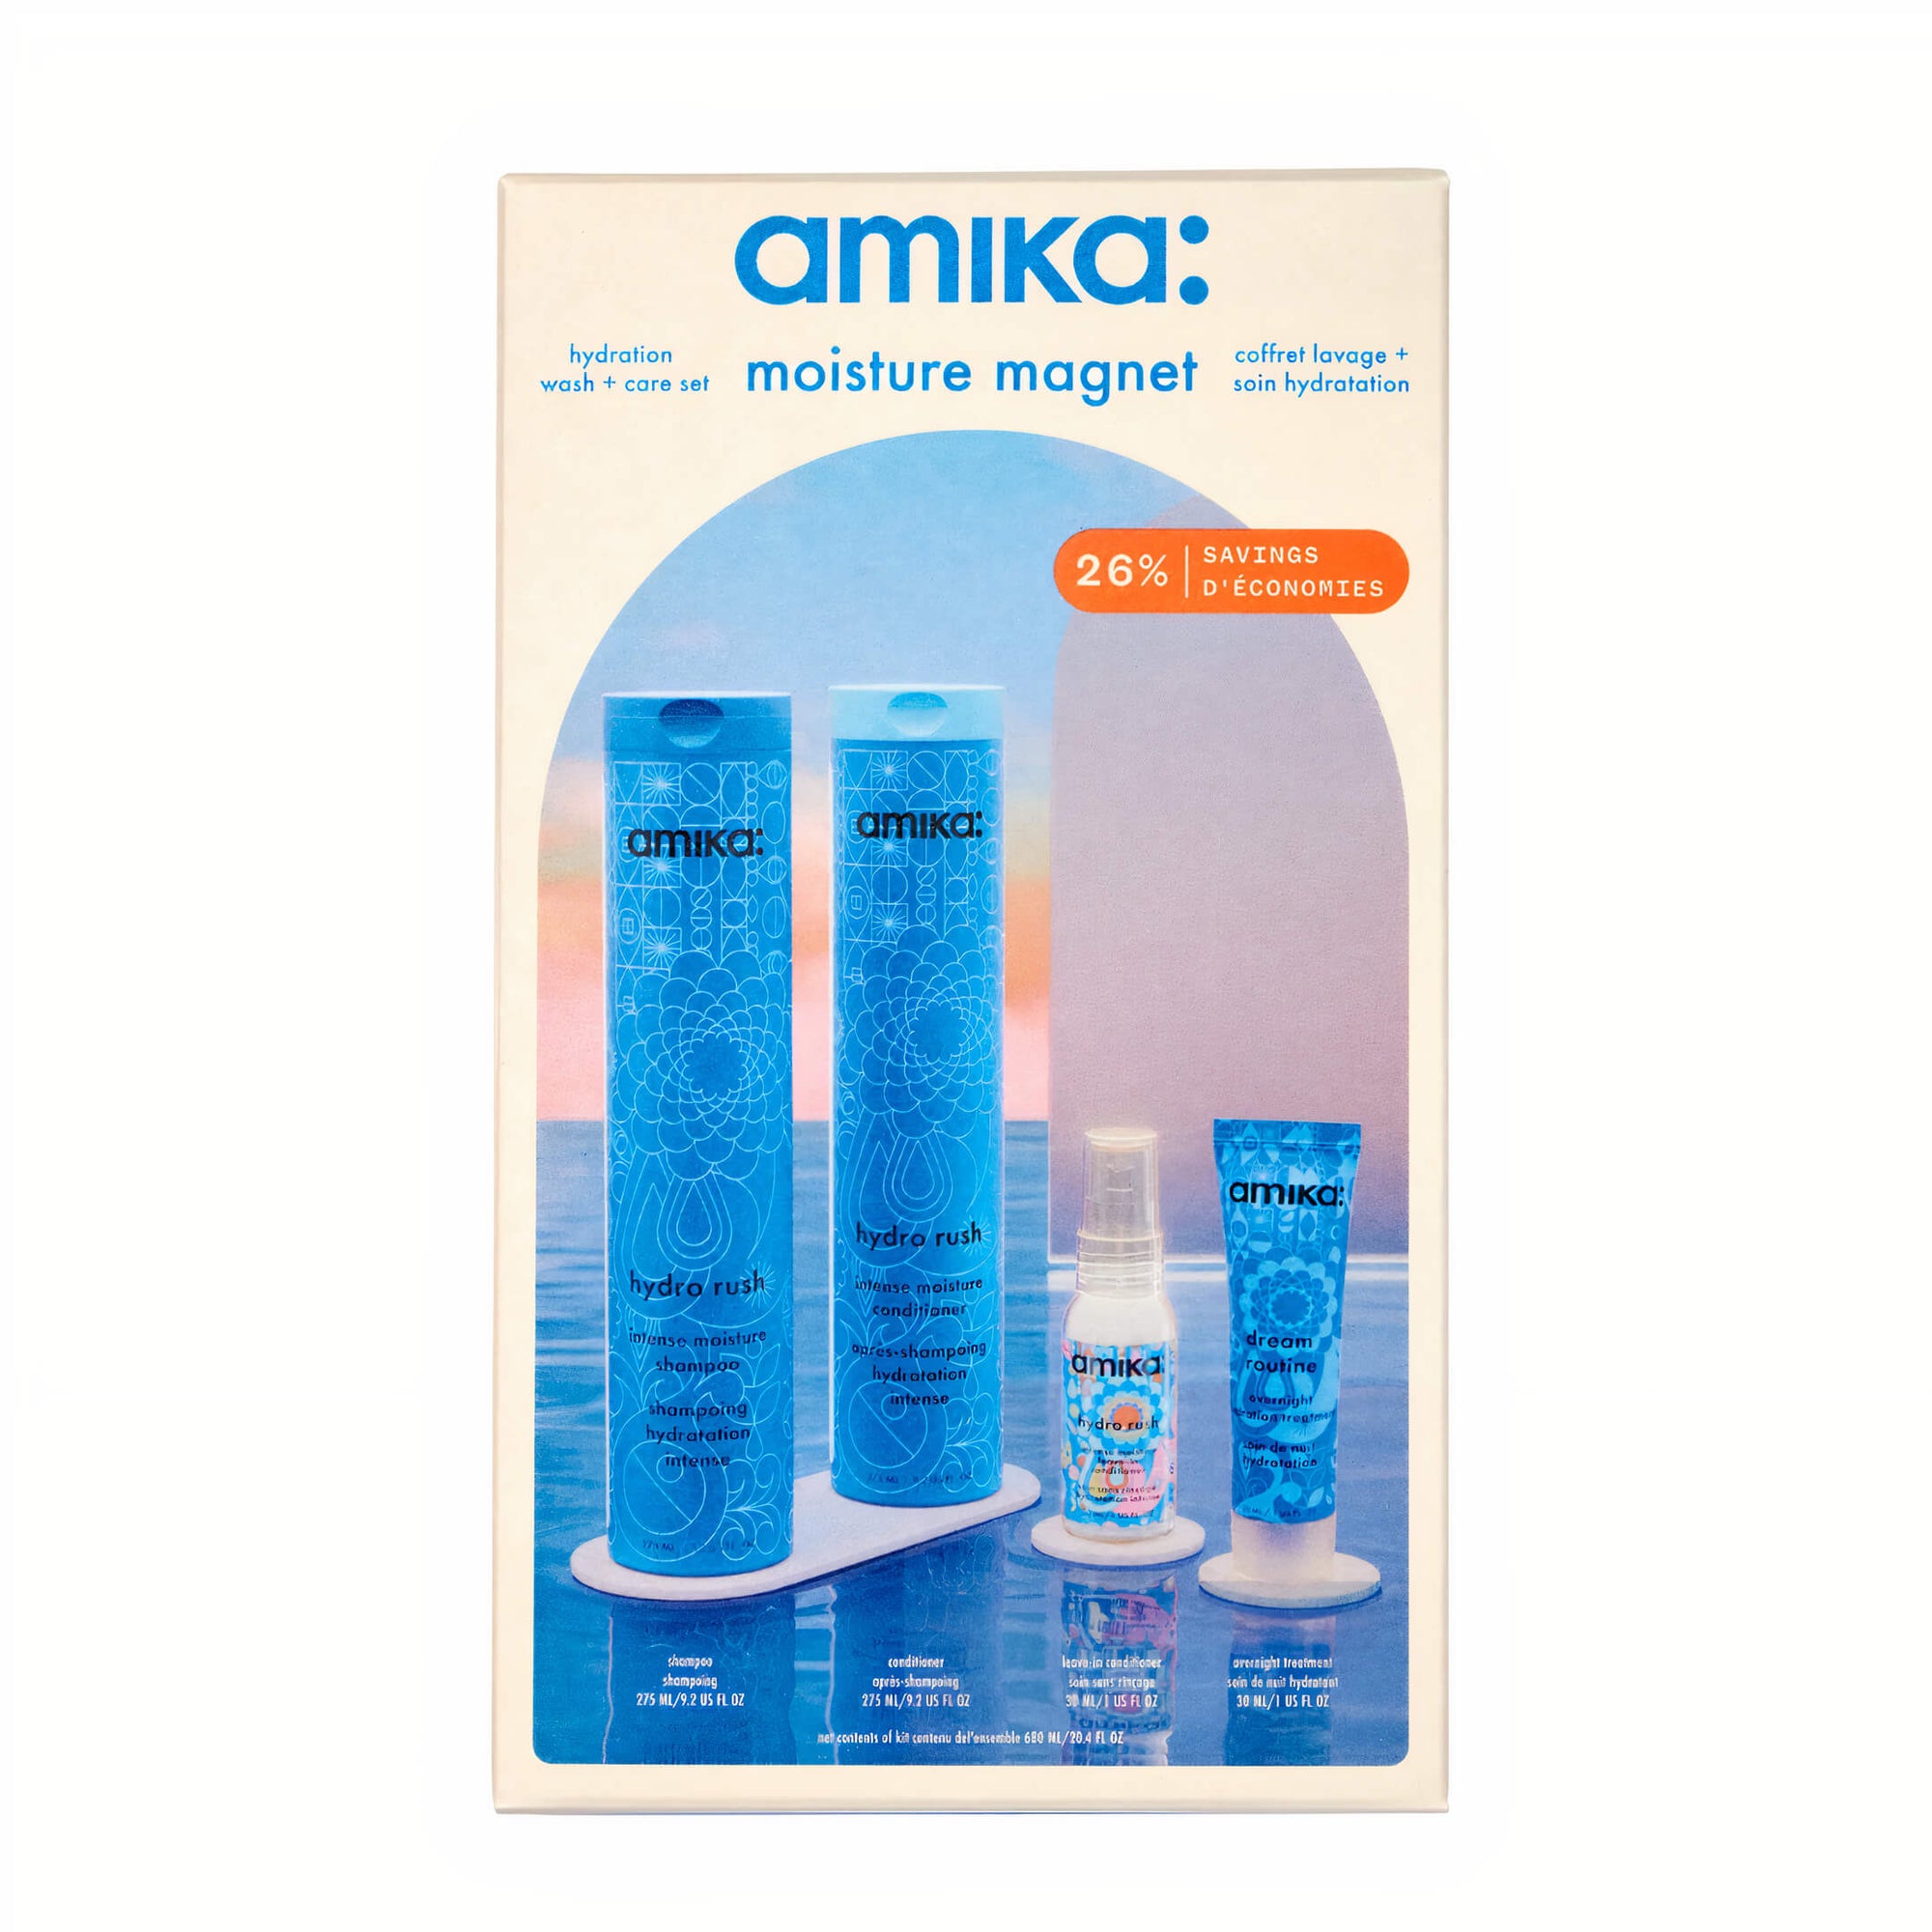 Amika | Moisture magnet hydration wash + care hair set